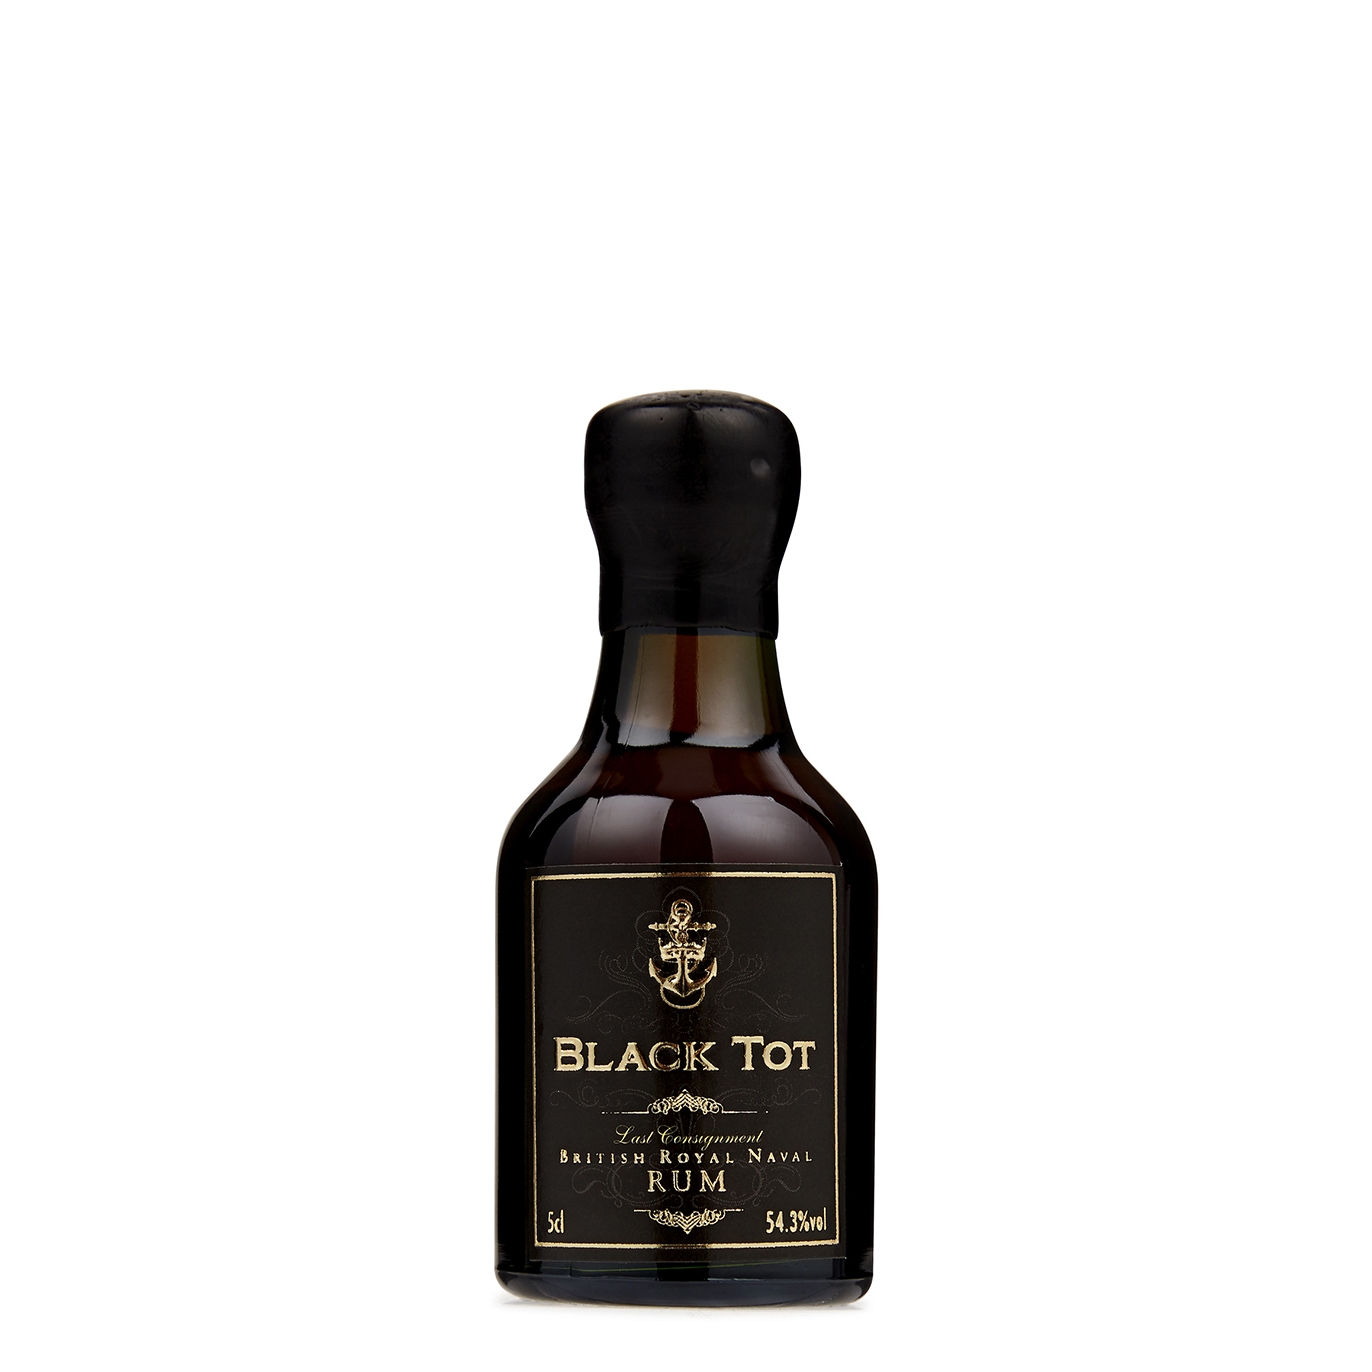 Black Tot Rum Last Consignment British Royal Naval Rum Miniature 50ml